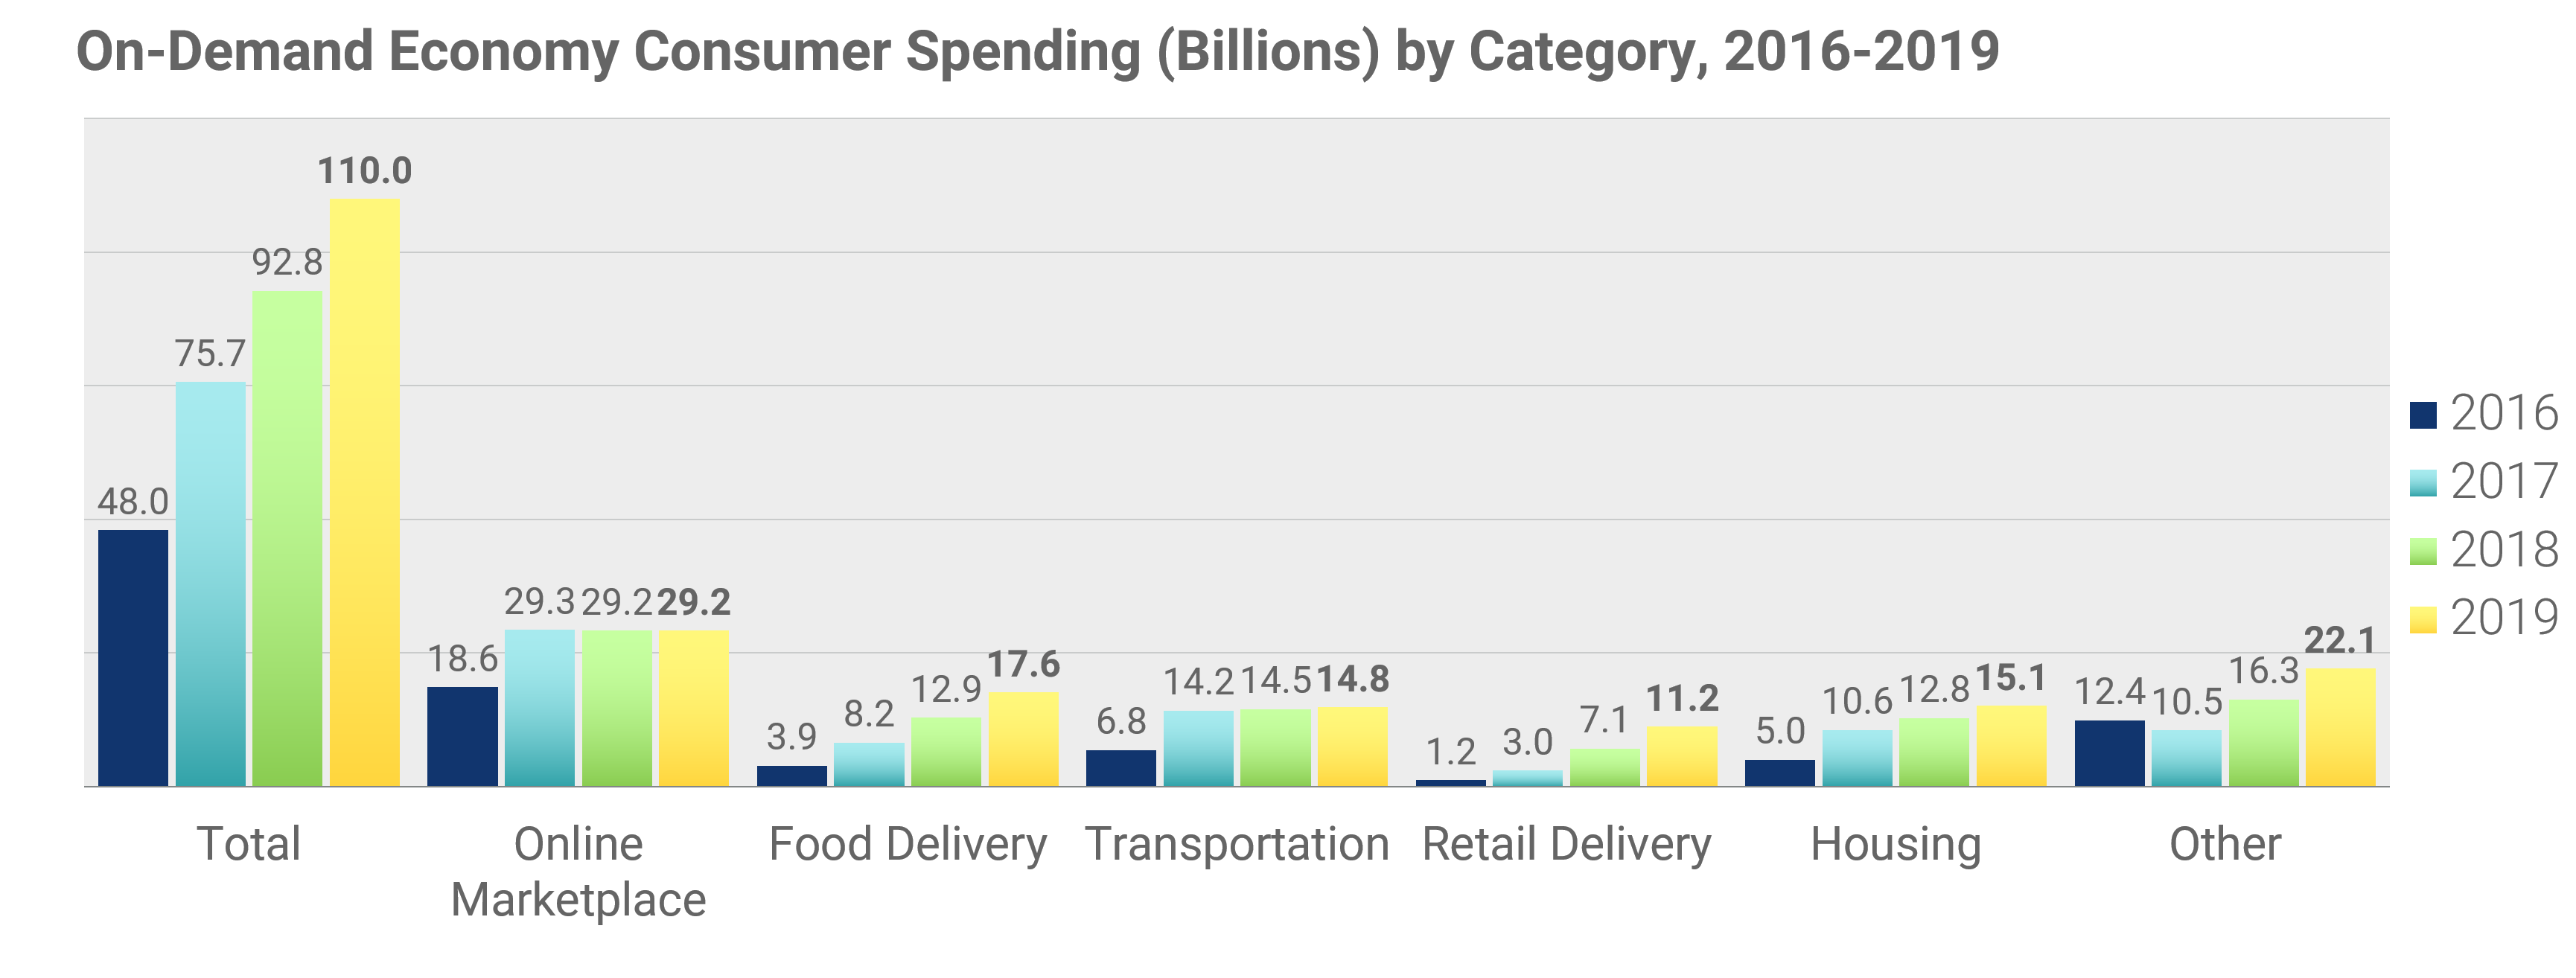 On-demand economy consumer spending